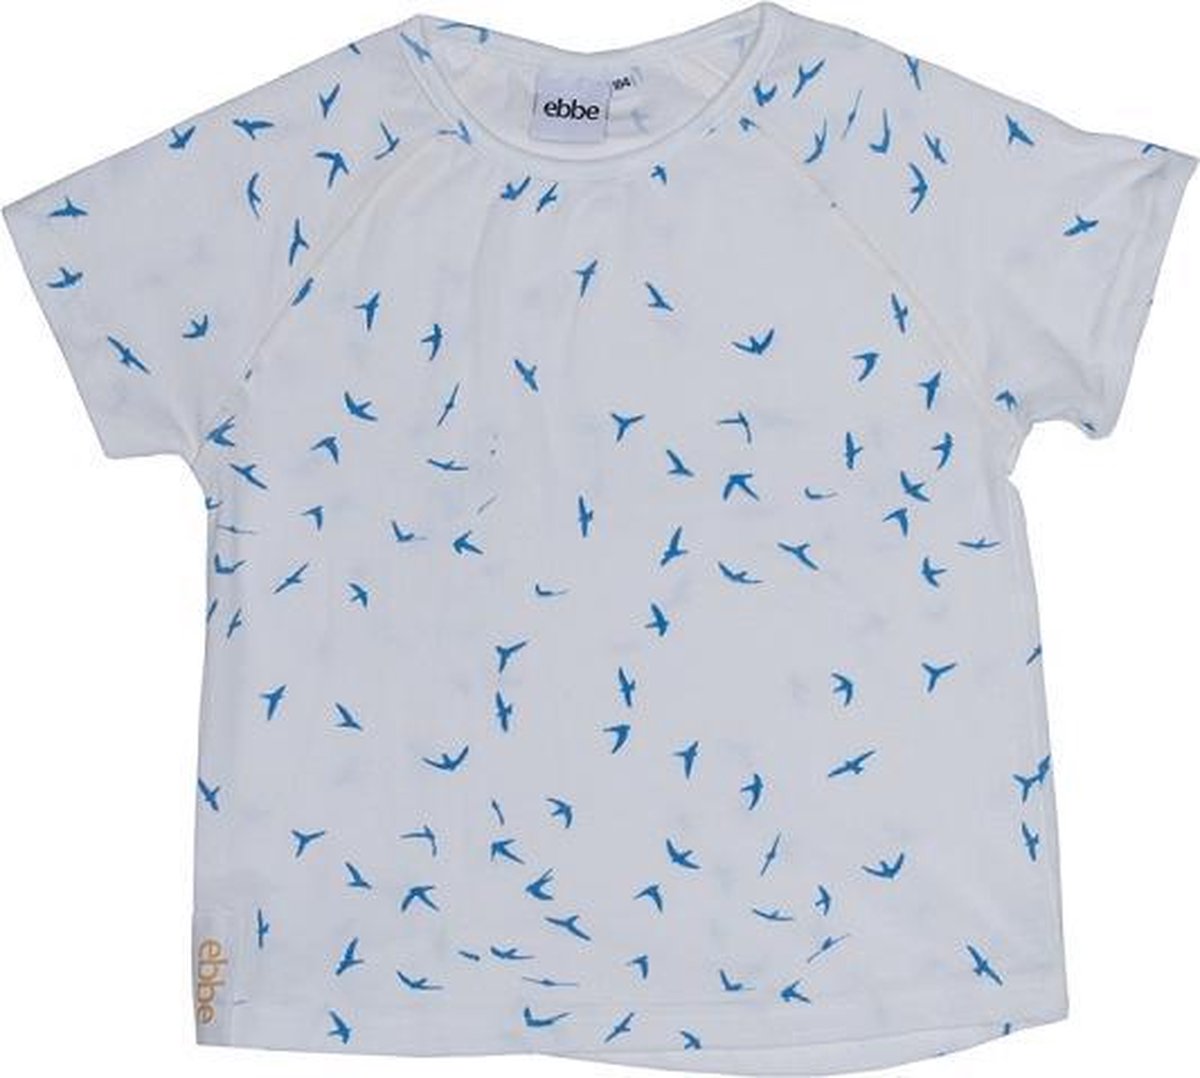 Ebbe - T-shirt - Uno swallow tee - wit - Maat 110